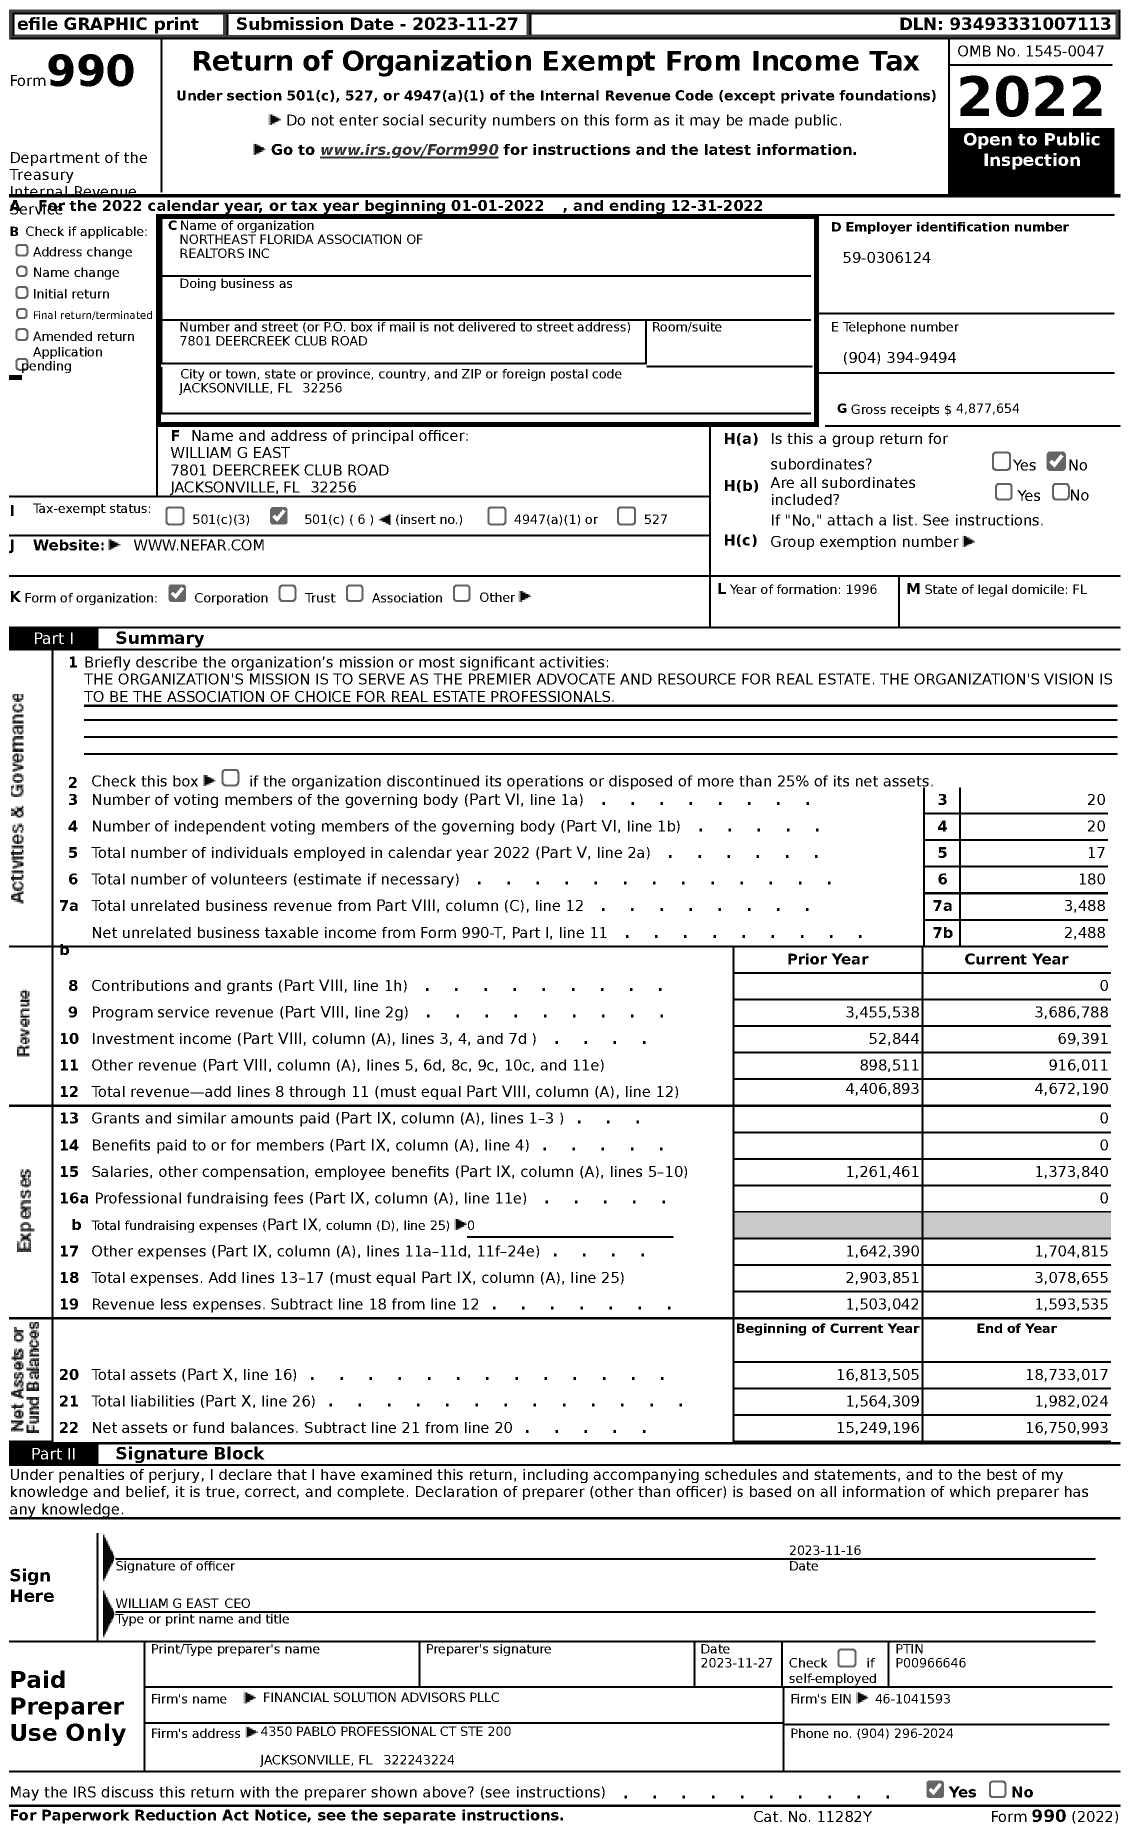 Image of first page of 2022 Form 990 for Northeast Florida Association of Realtors (NEFAR)